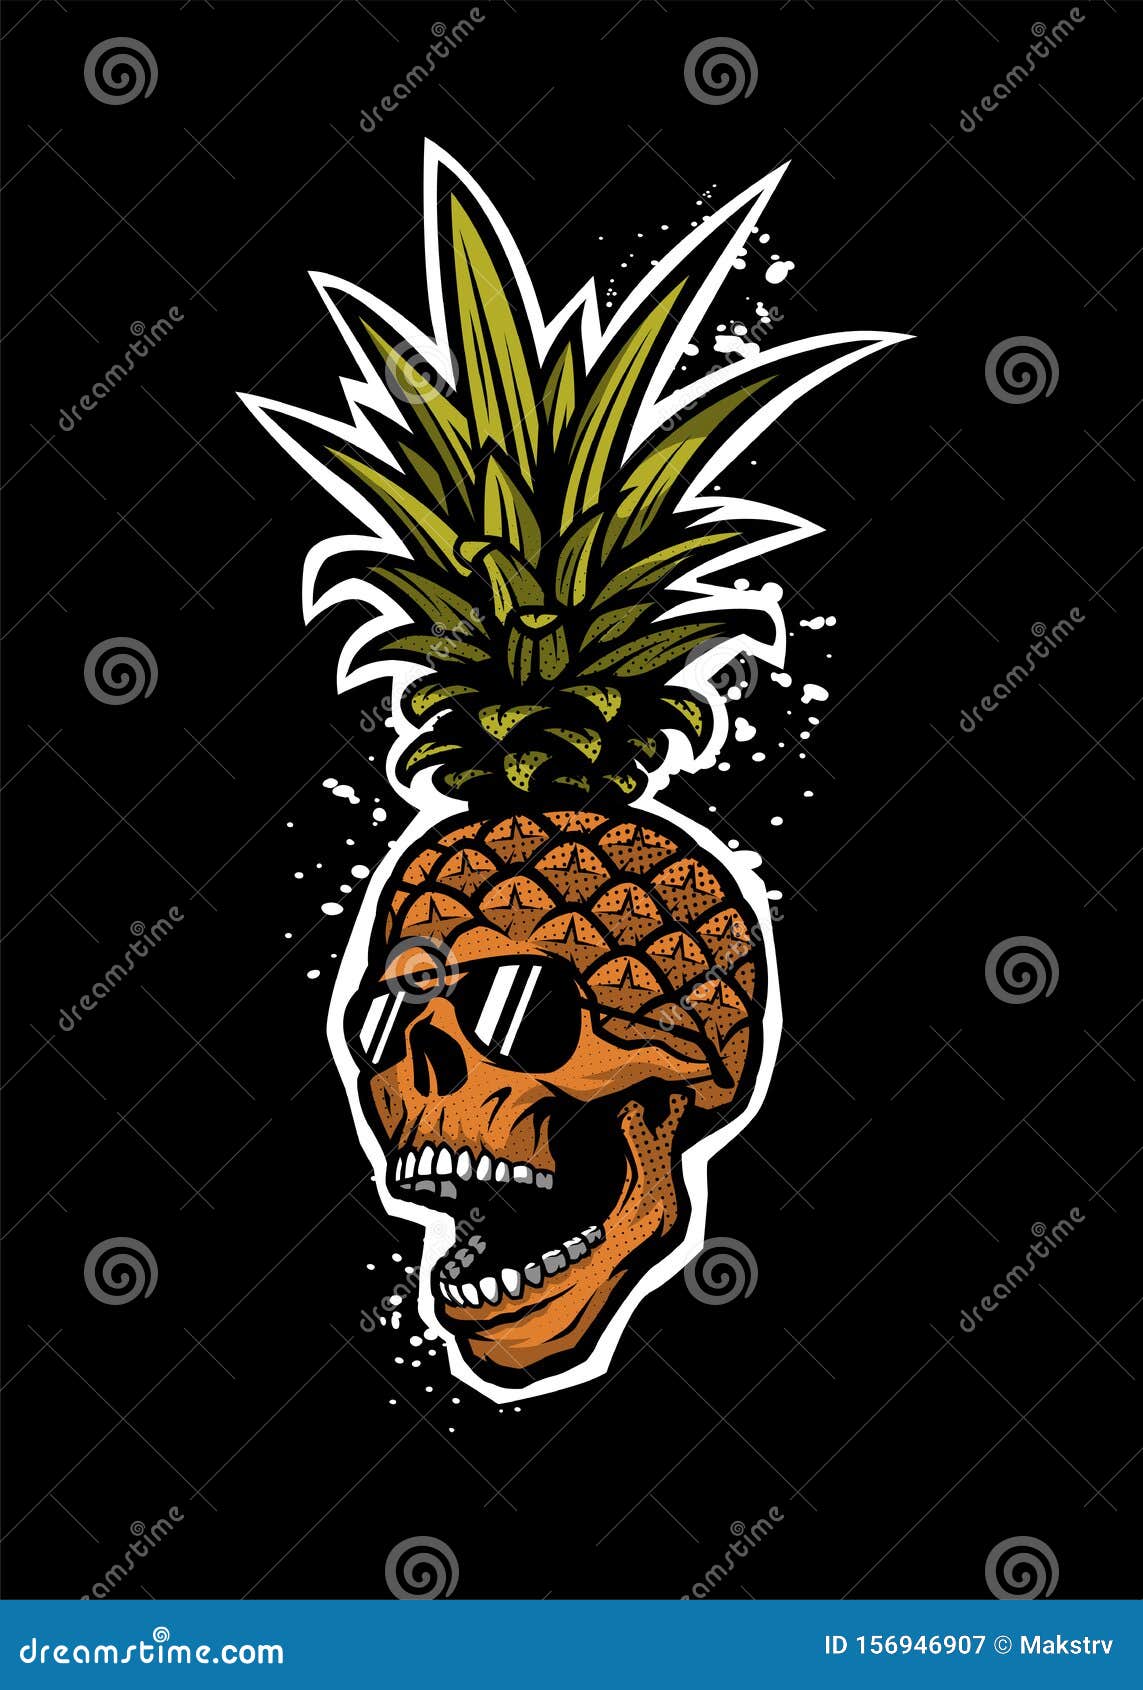 𝕵𝖎𝖑𝖑𝖎𝖆𝖓 𝕾𝖆𝖓𝖙𝖔𝖘 on Instagram pineapple skull for chyz  thanks again  pineappletattoo skulltattoo fruittattoo  neotraditionaltattoo torontotattoo boldtattoo